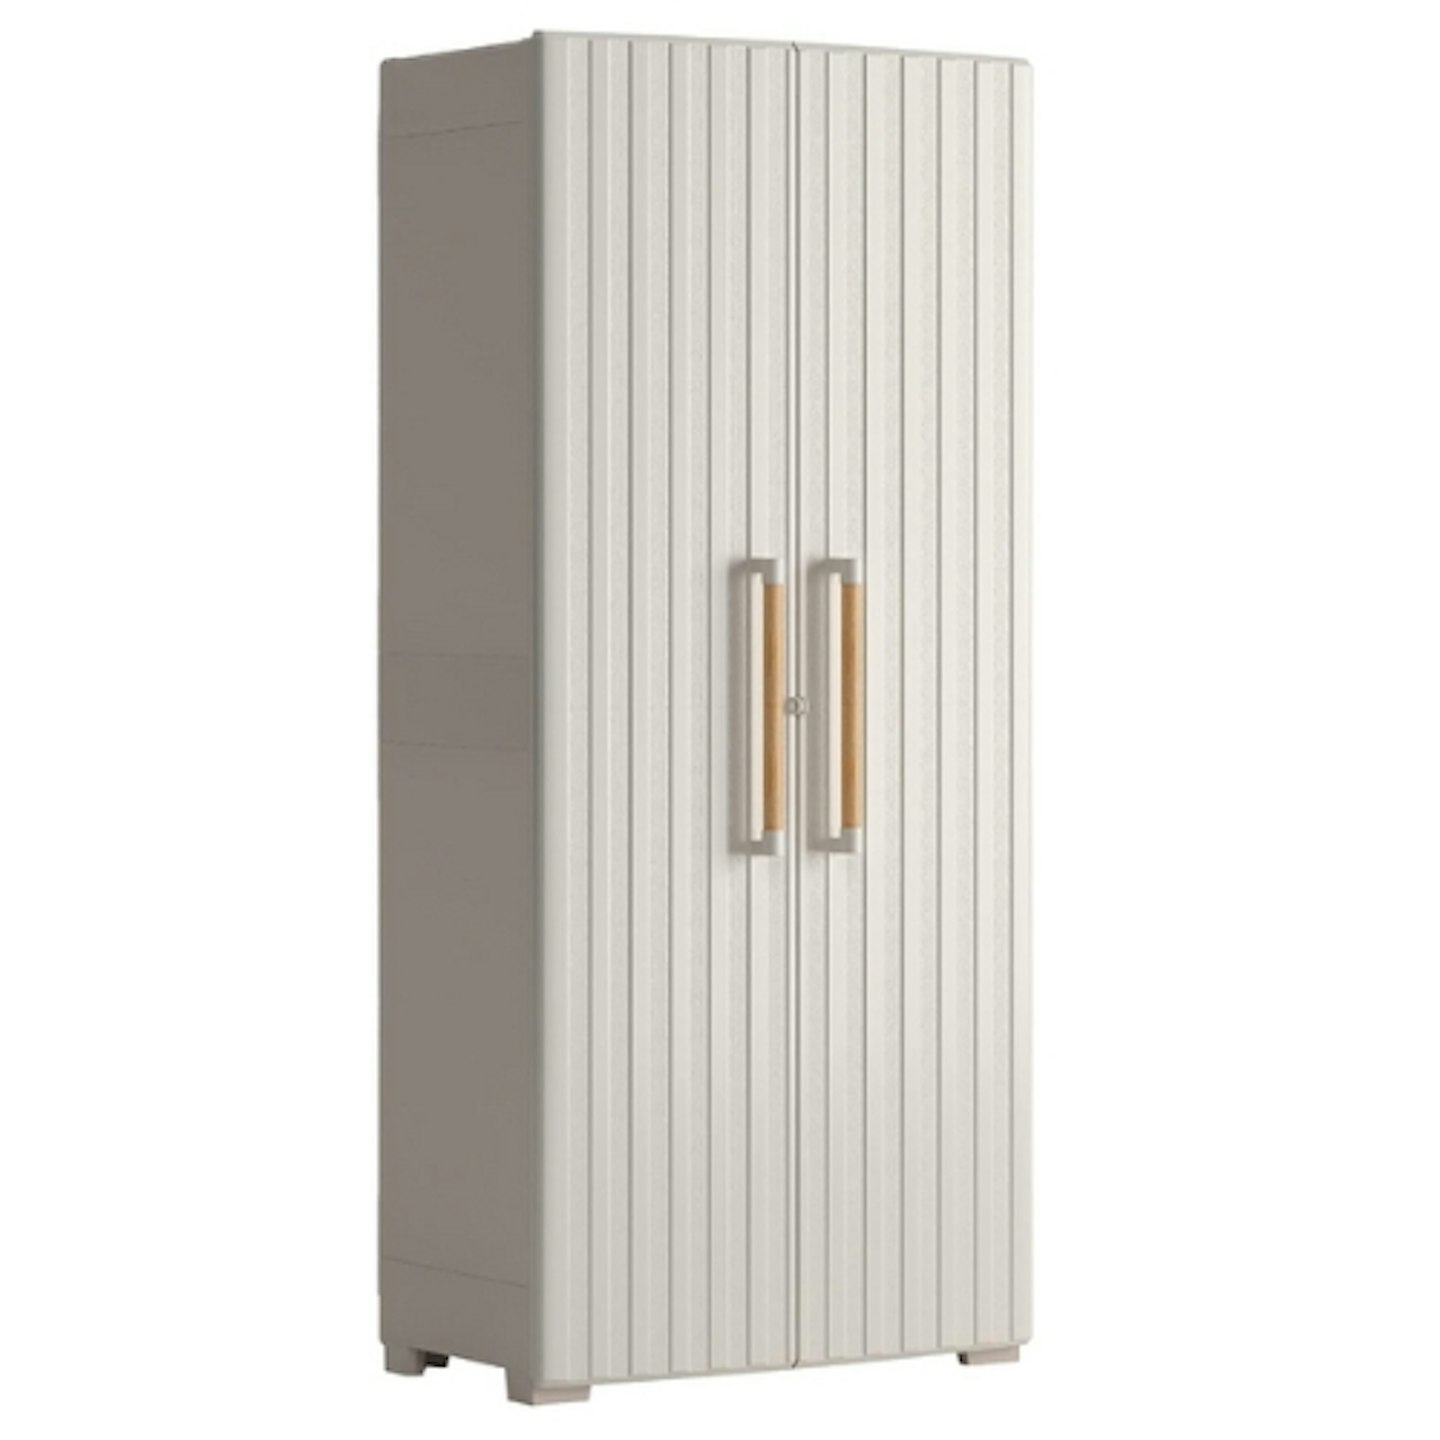 Keter Groove Tall Indoor Outdoor Garage Utility Multi-Purpose Cabinet